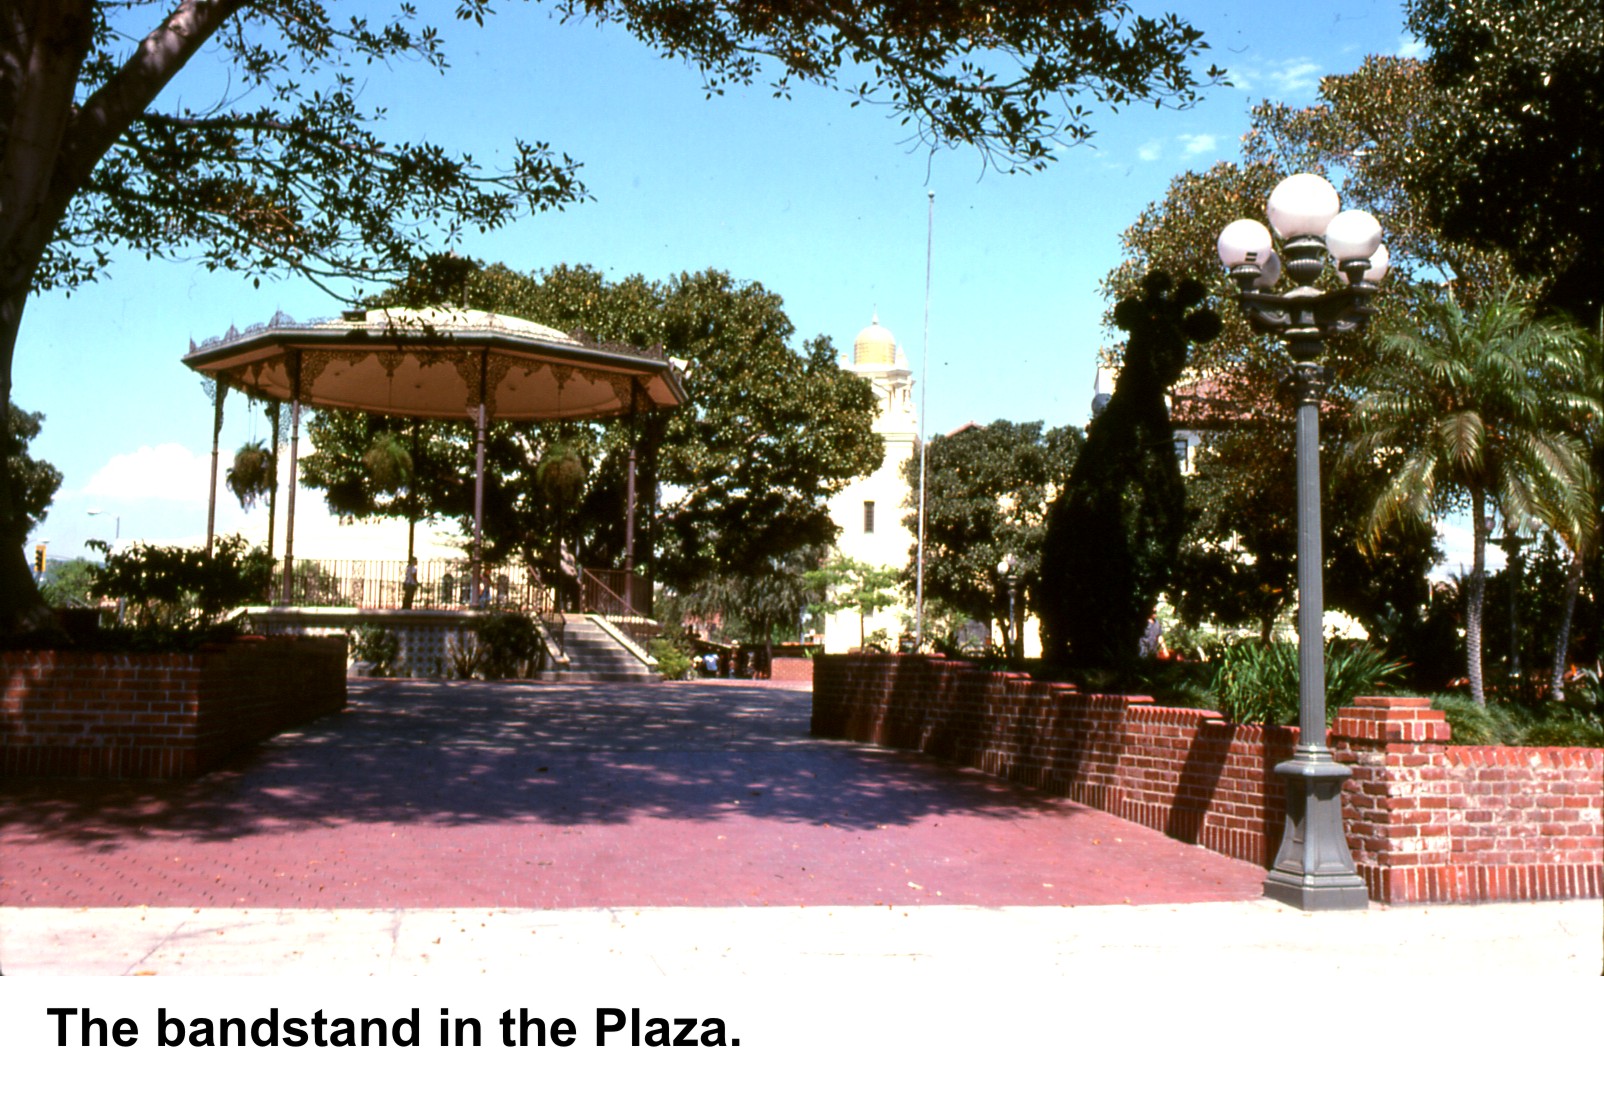 Old Plaza bandstand